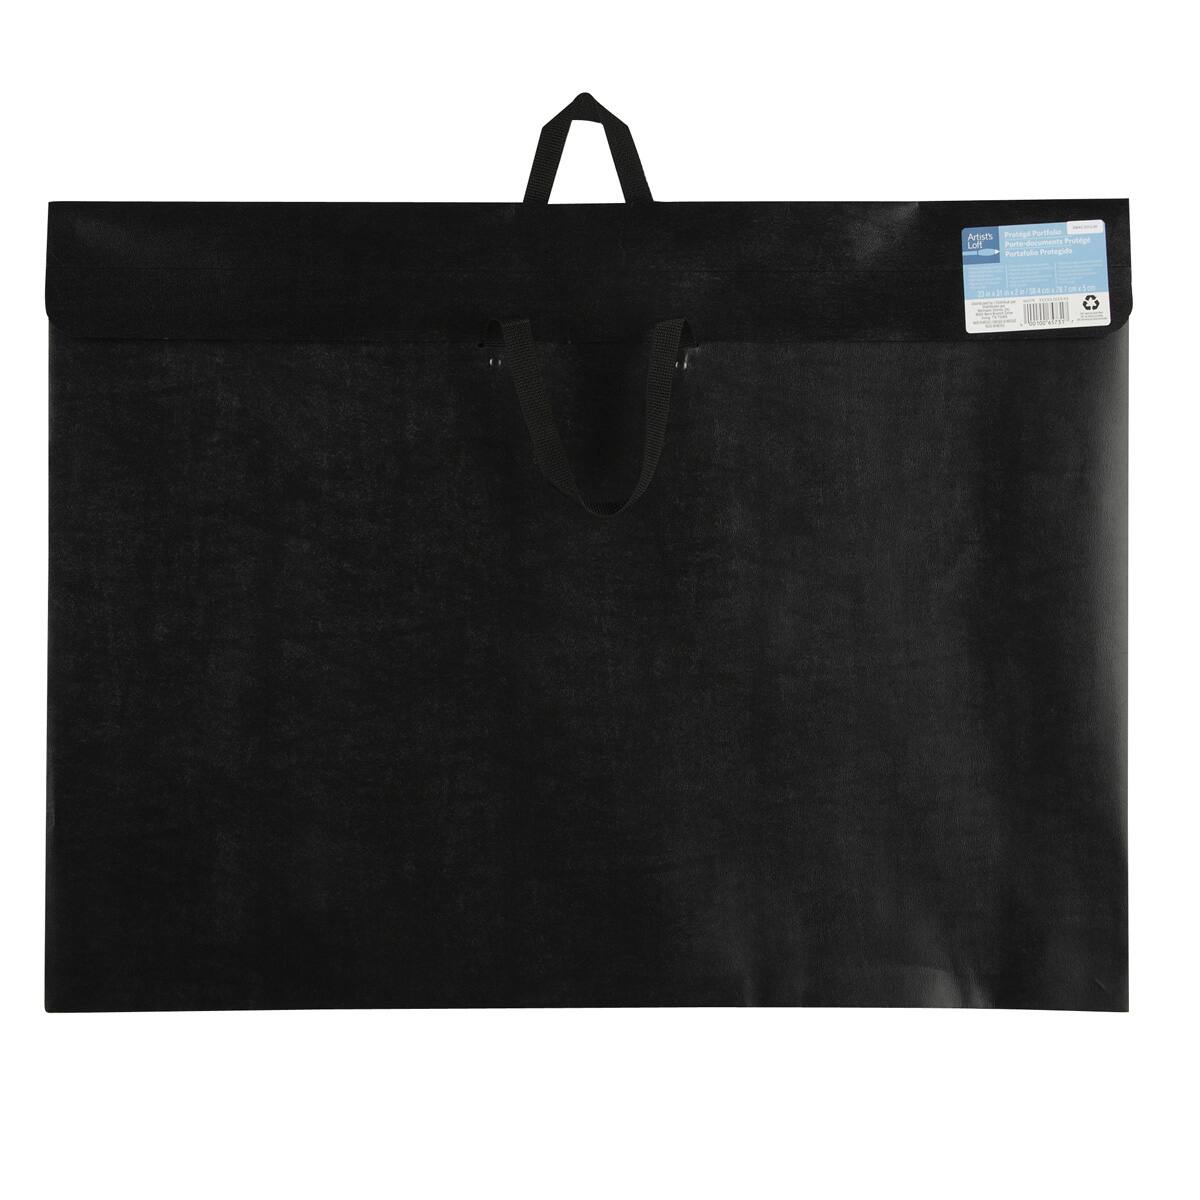 Artist's Loft Large Black Folding Portfolio 19 in × 25 in PHOTO GALLERY BAG NEW 